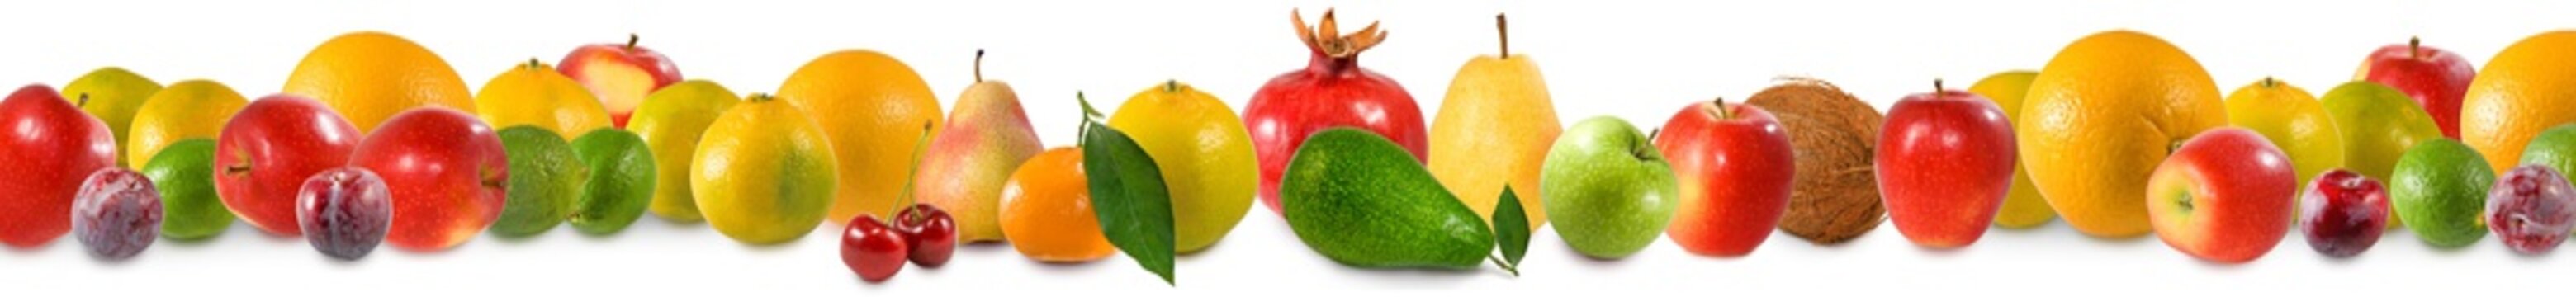 image of various ripe fruits on white background close-up